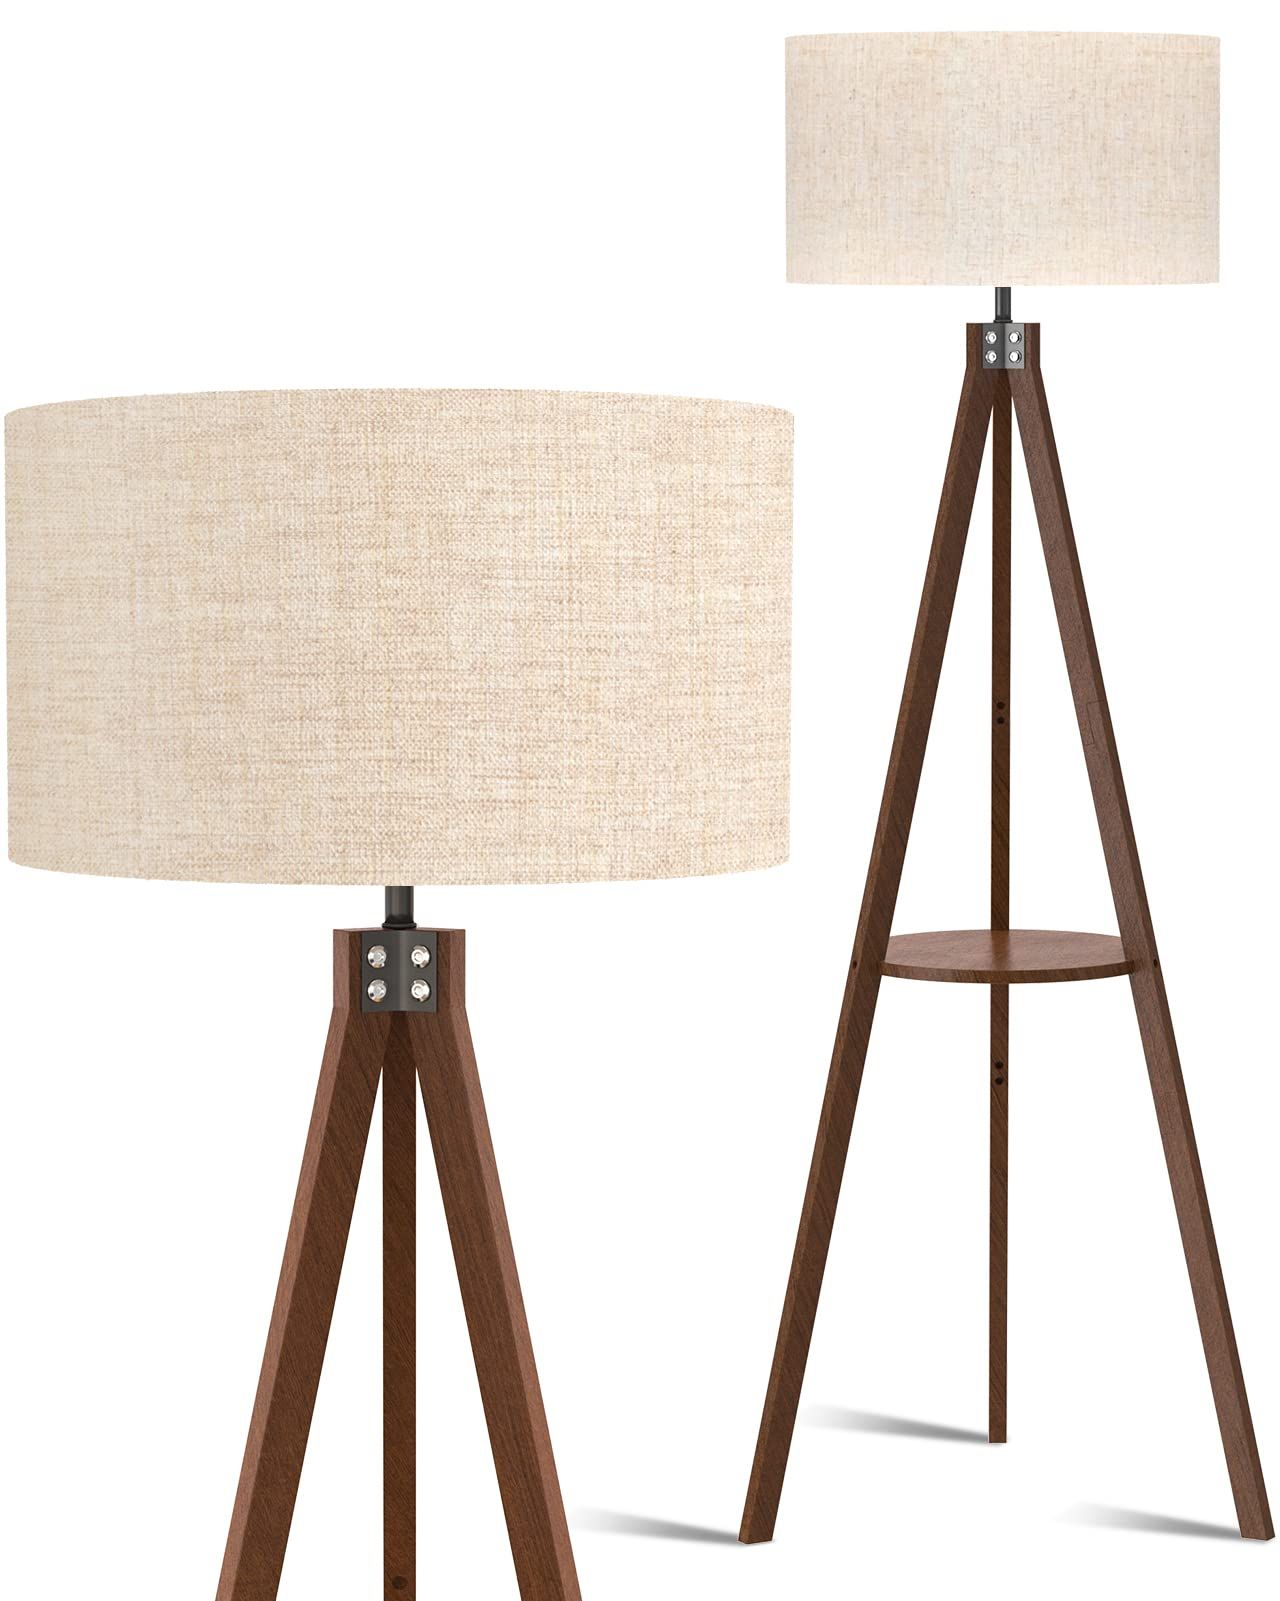 2019 Lepower Tripod Floor Lamp, Mid Century Standing Lamp With Shelf, Modern  Design Wood Floor Lamps For With Regard To Mid Century Standing Lamps (View 6 of 10)